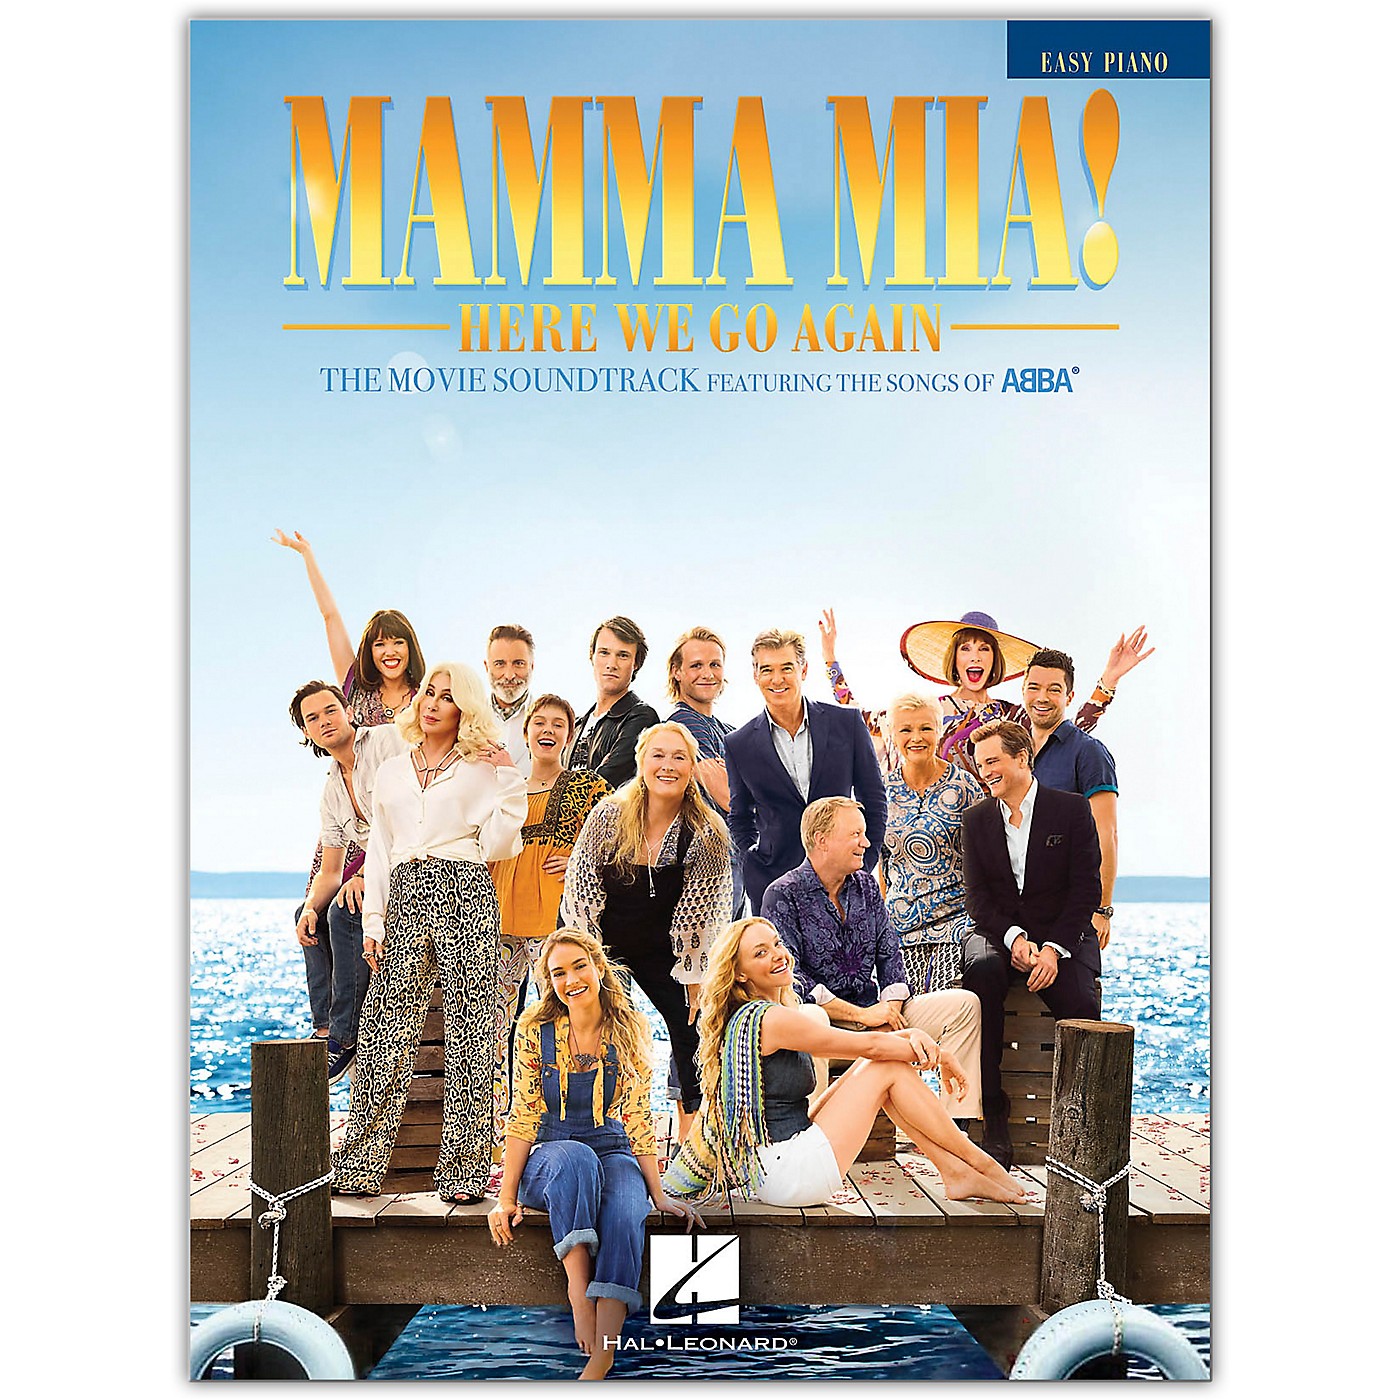 Hal Leonard Mamma Mia! - Here We Go Again Easy Piano Songbook thumbnail